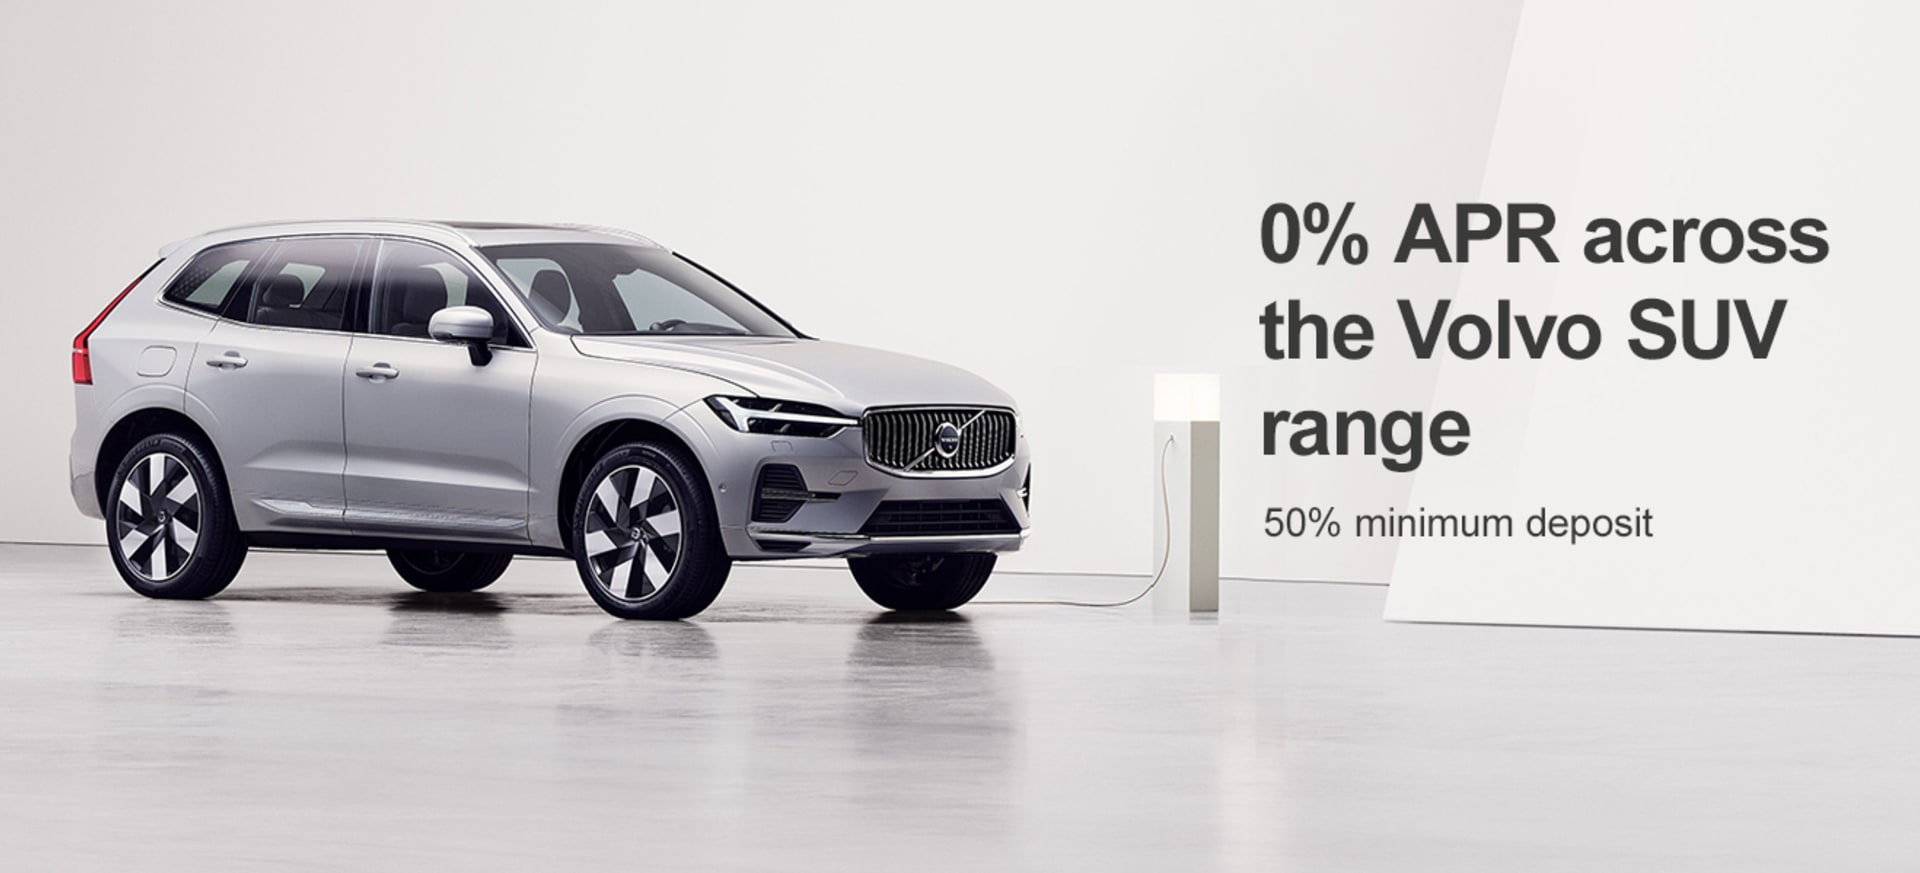 0% APR across the Volvo SUV range.